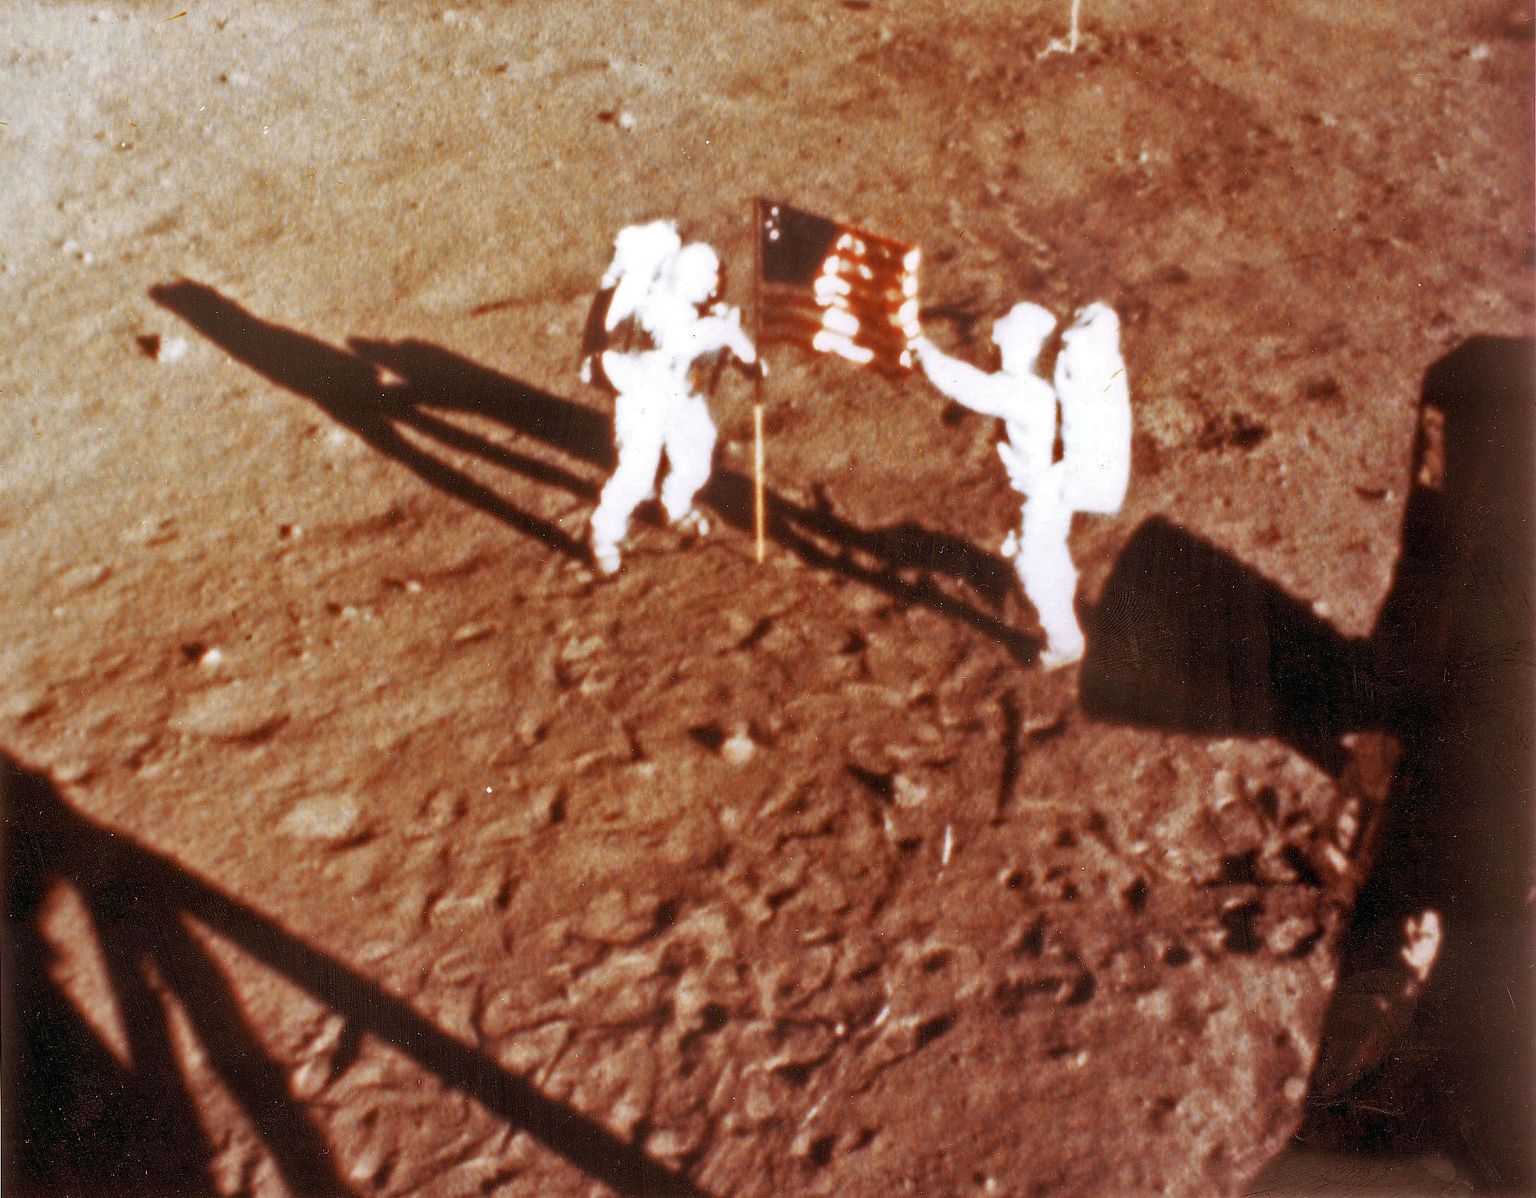 Нил Армстронг и Базз Олдрин на Луне в 1969 году